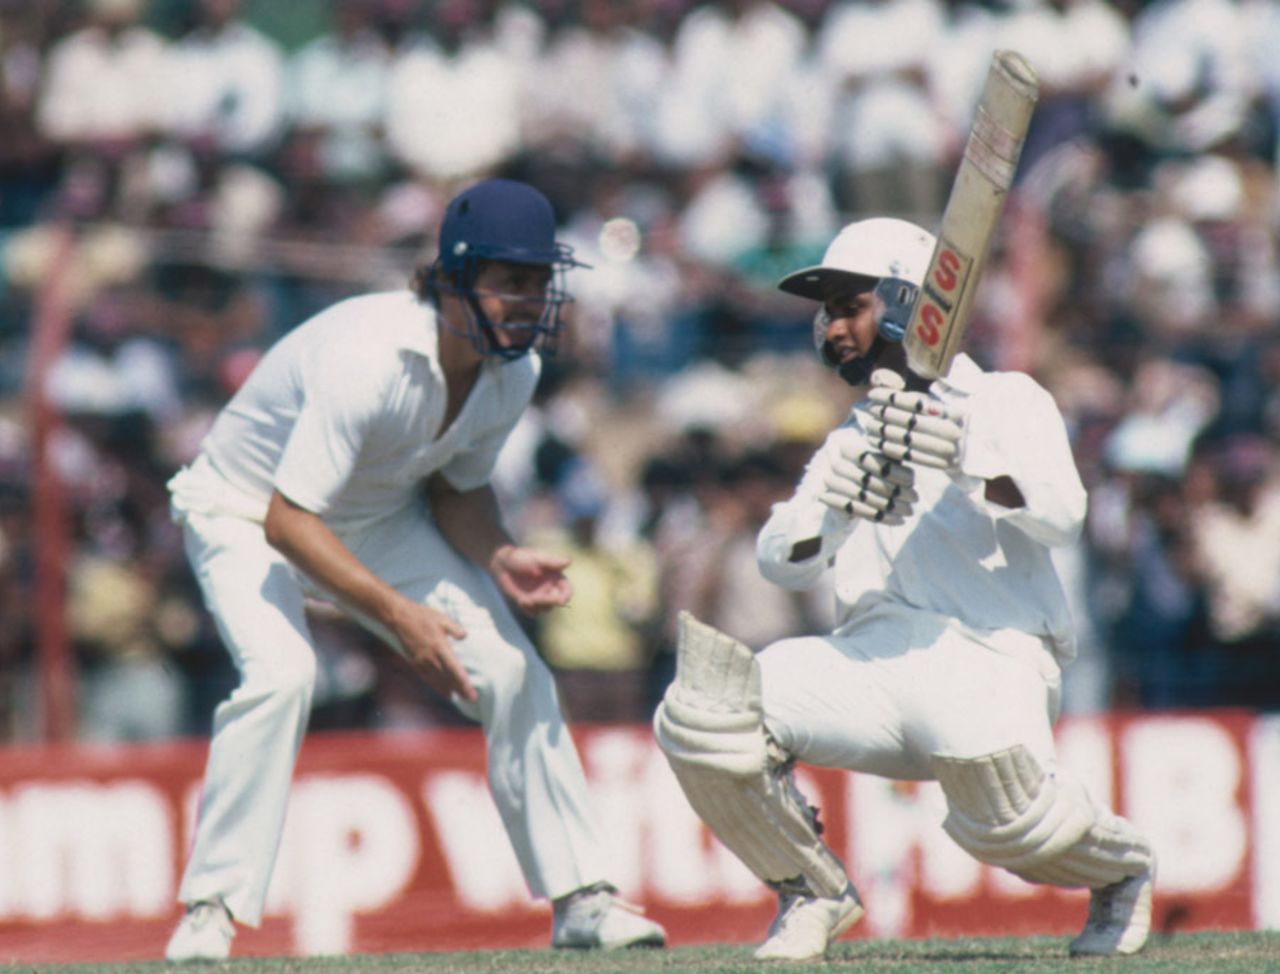 Arjuna Ranatunga hits out, Sri Lanka v England, Only Test, P Sara Oval, 1st day, February 17, 1982